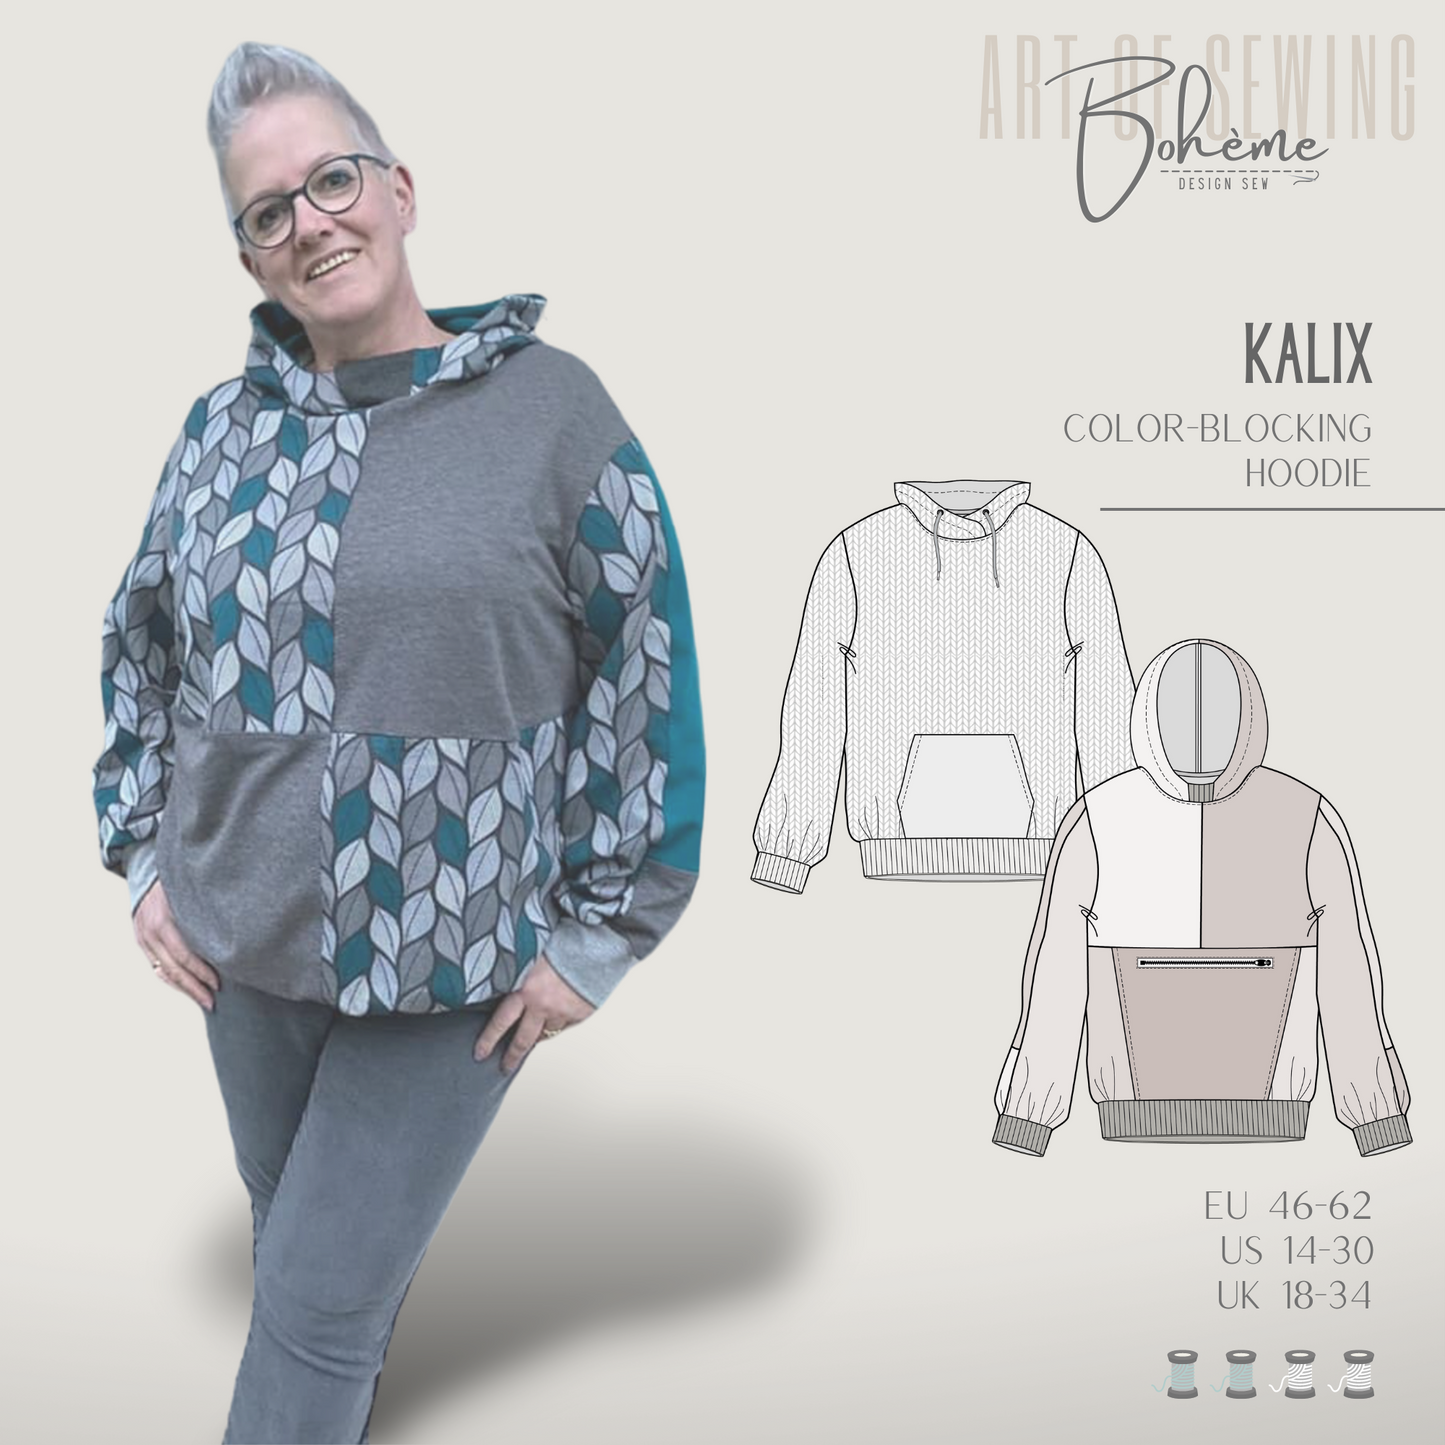 Hoodie | Kalix W2409 | Woman L - 4XL | Digital Sewing Pattern | PDF | Projector | Bohème | Sweater | Pullover | Color Blocking